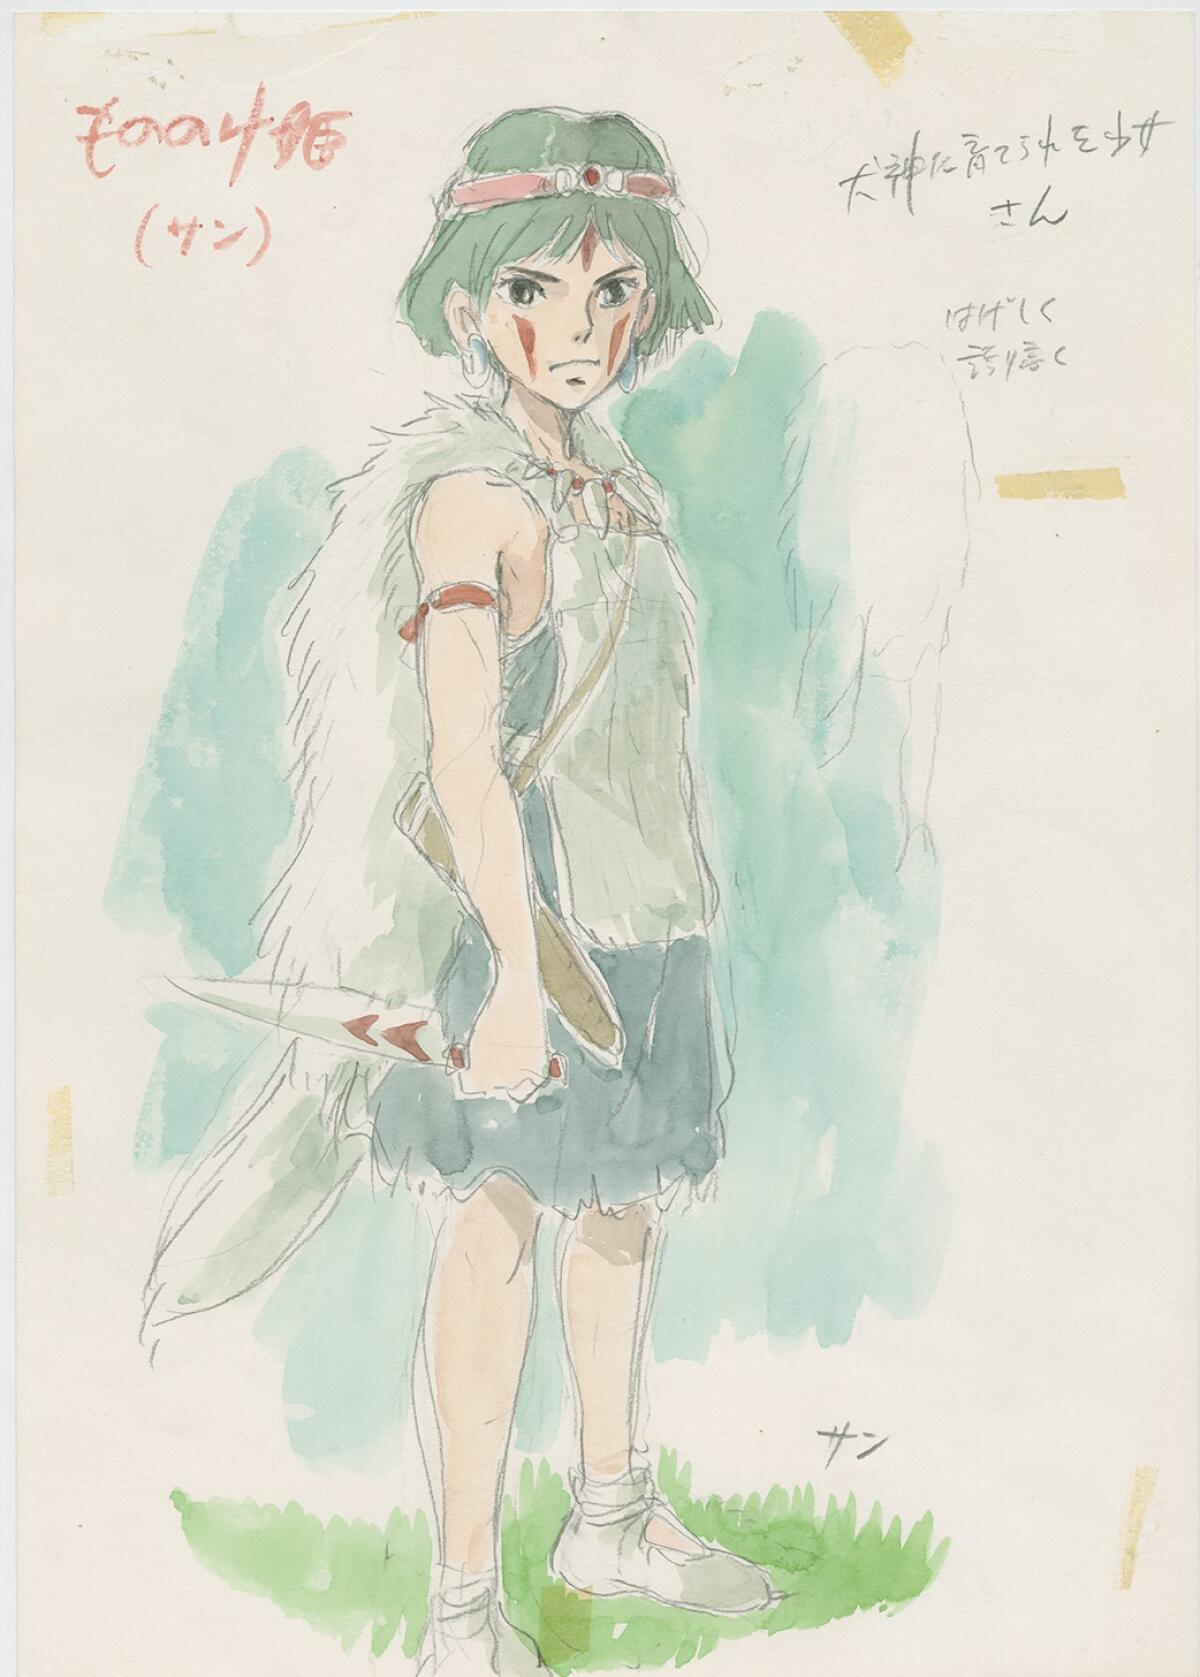 Drawing of "Princess Mononoke" character San by Hayao Miyazaki